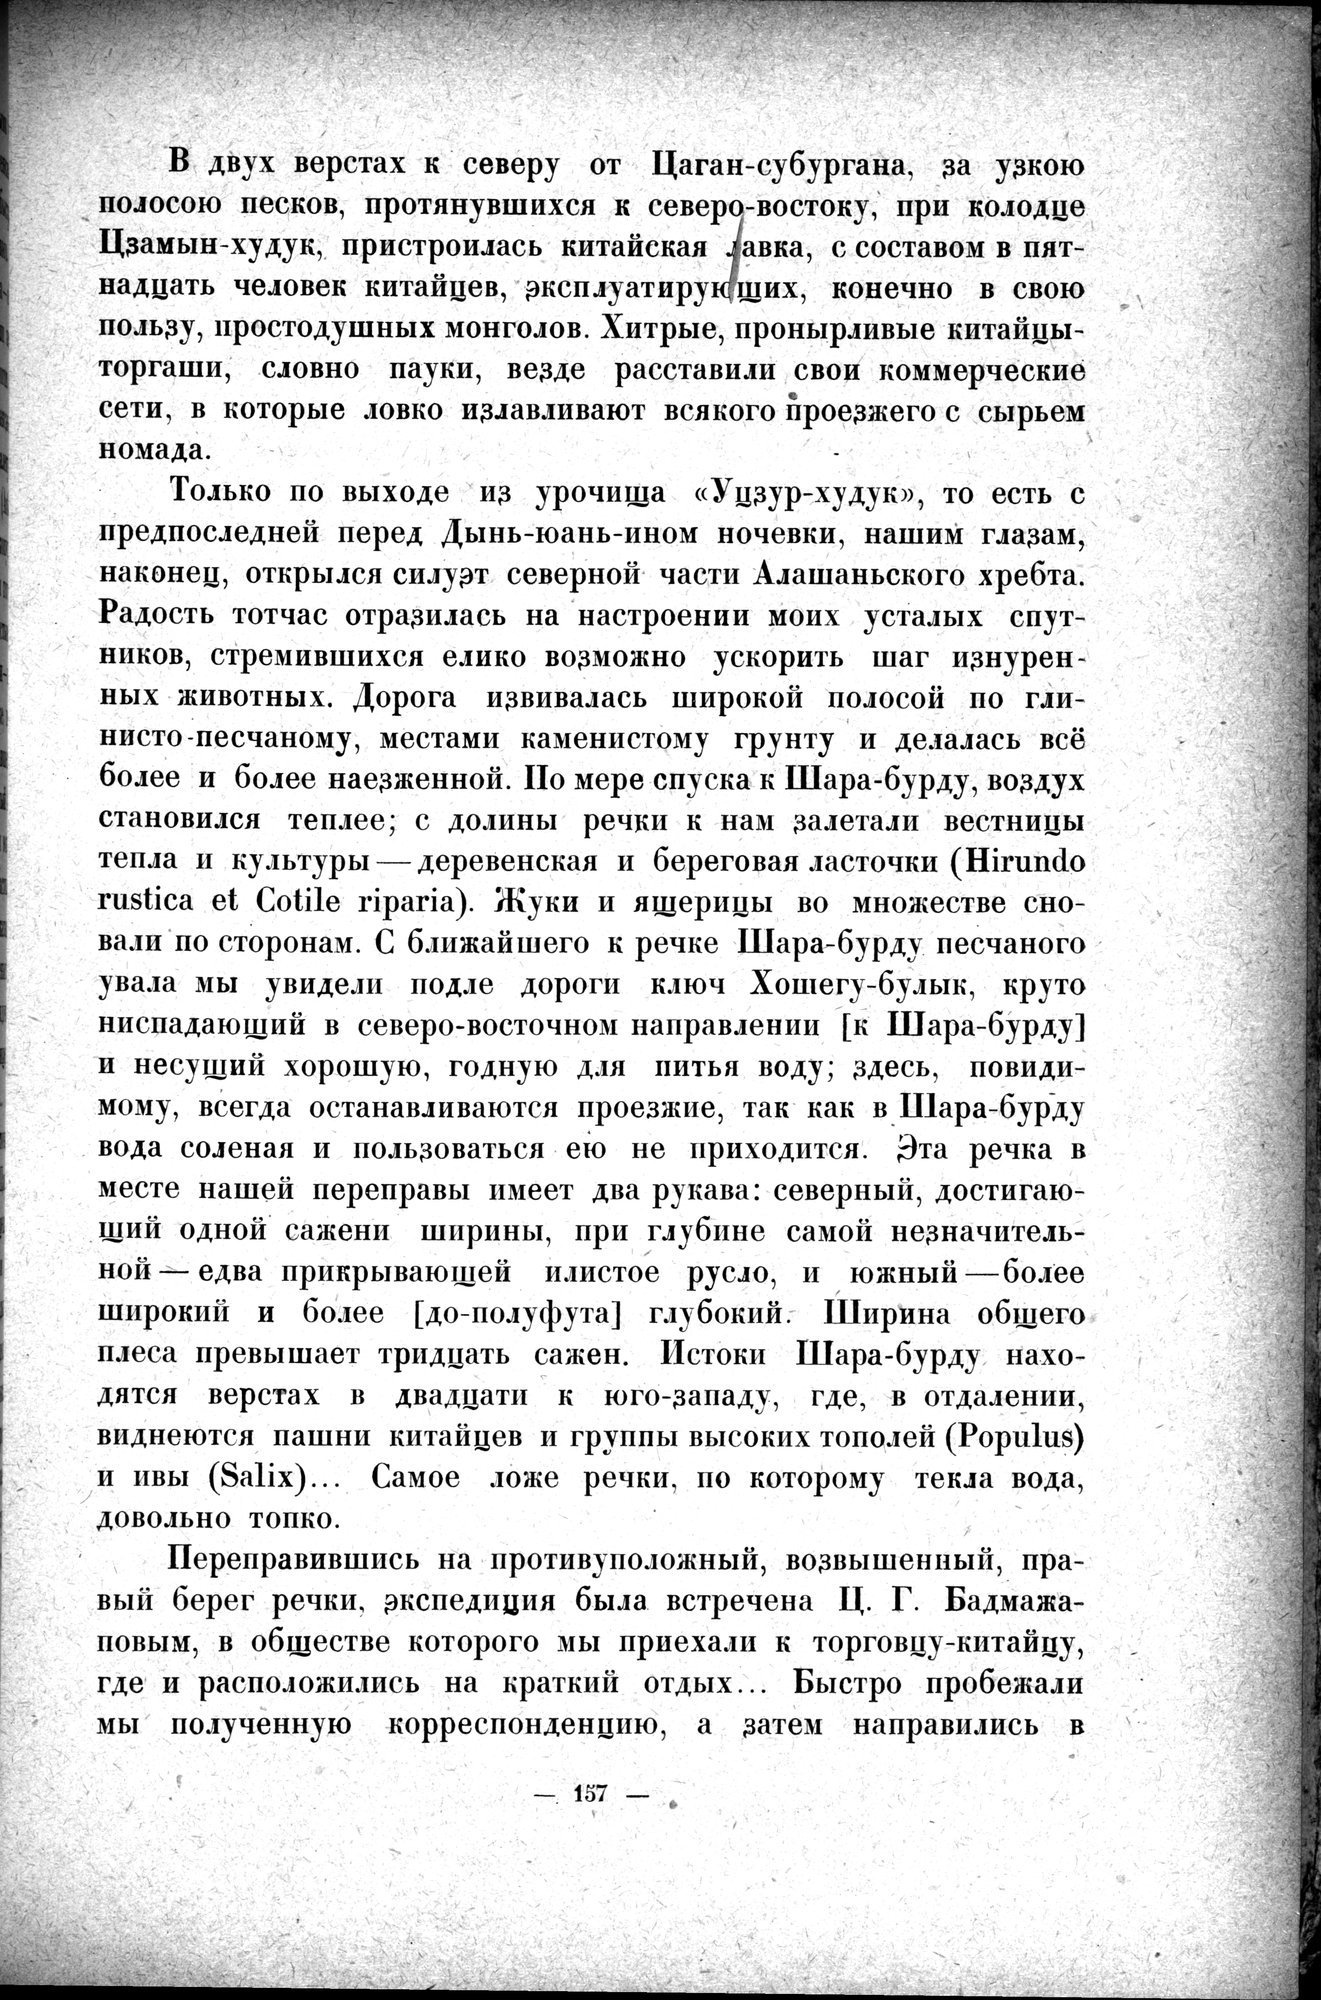 Mongoliya i Amdo i mertby gorod Khara-Khoto : vol.1 / Page 185 (Grayscale High Resolution Image)